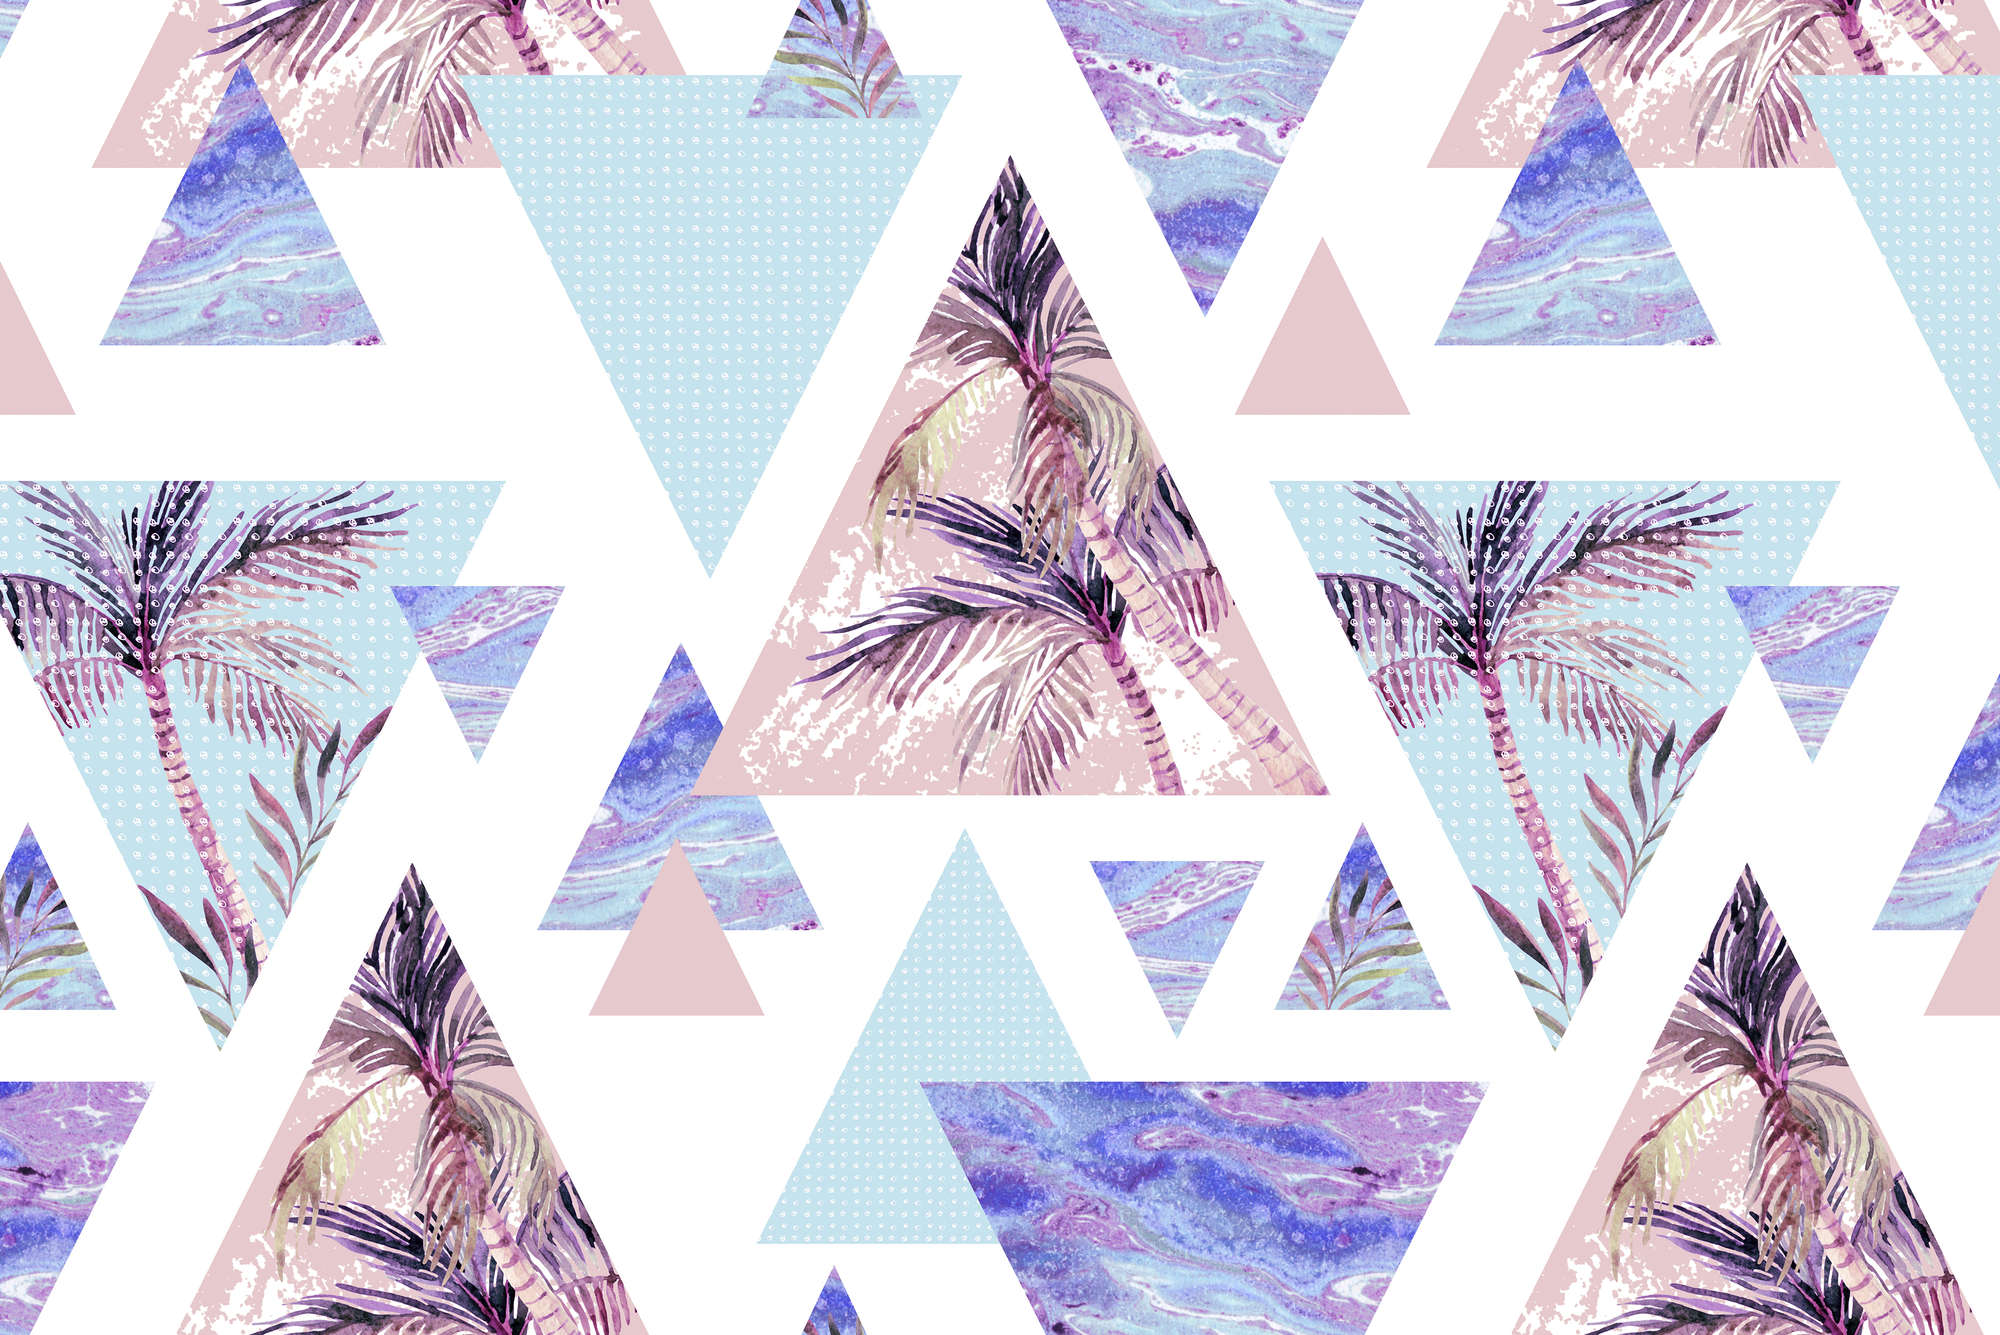             Triángulos gráficos de papel pintado con motivos de palmeras sobre vellón liso nacarado
        